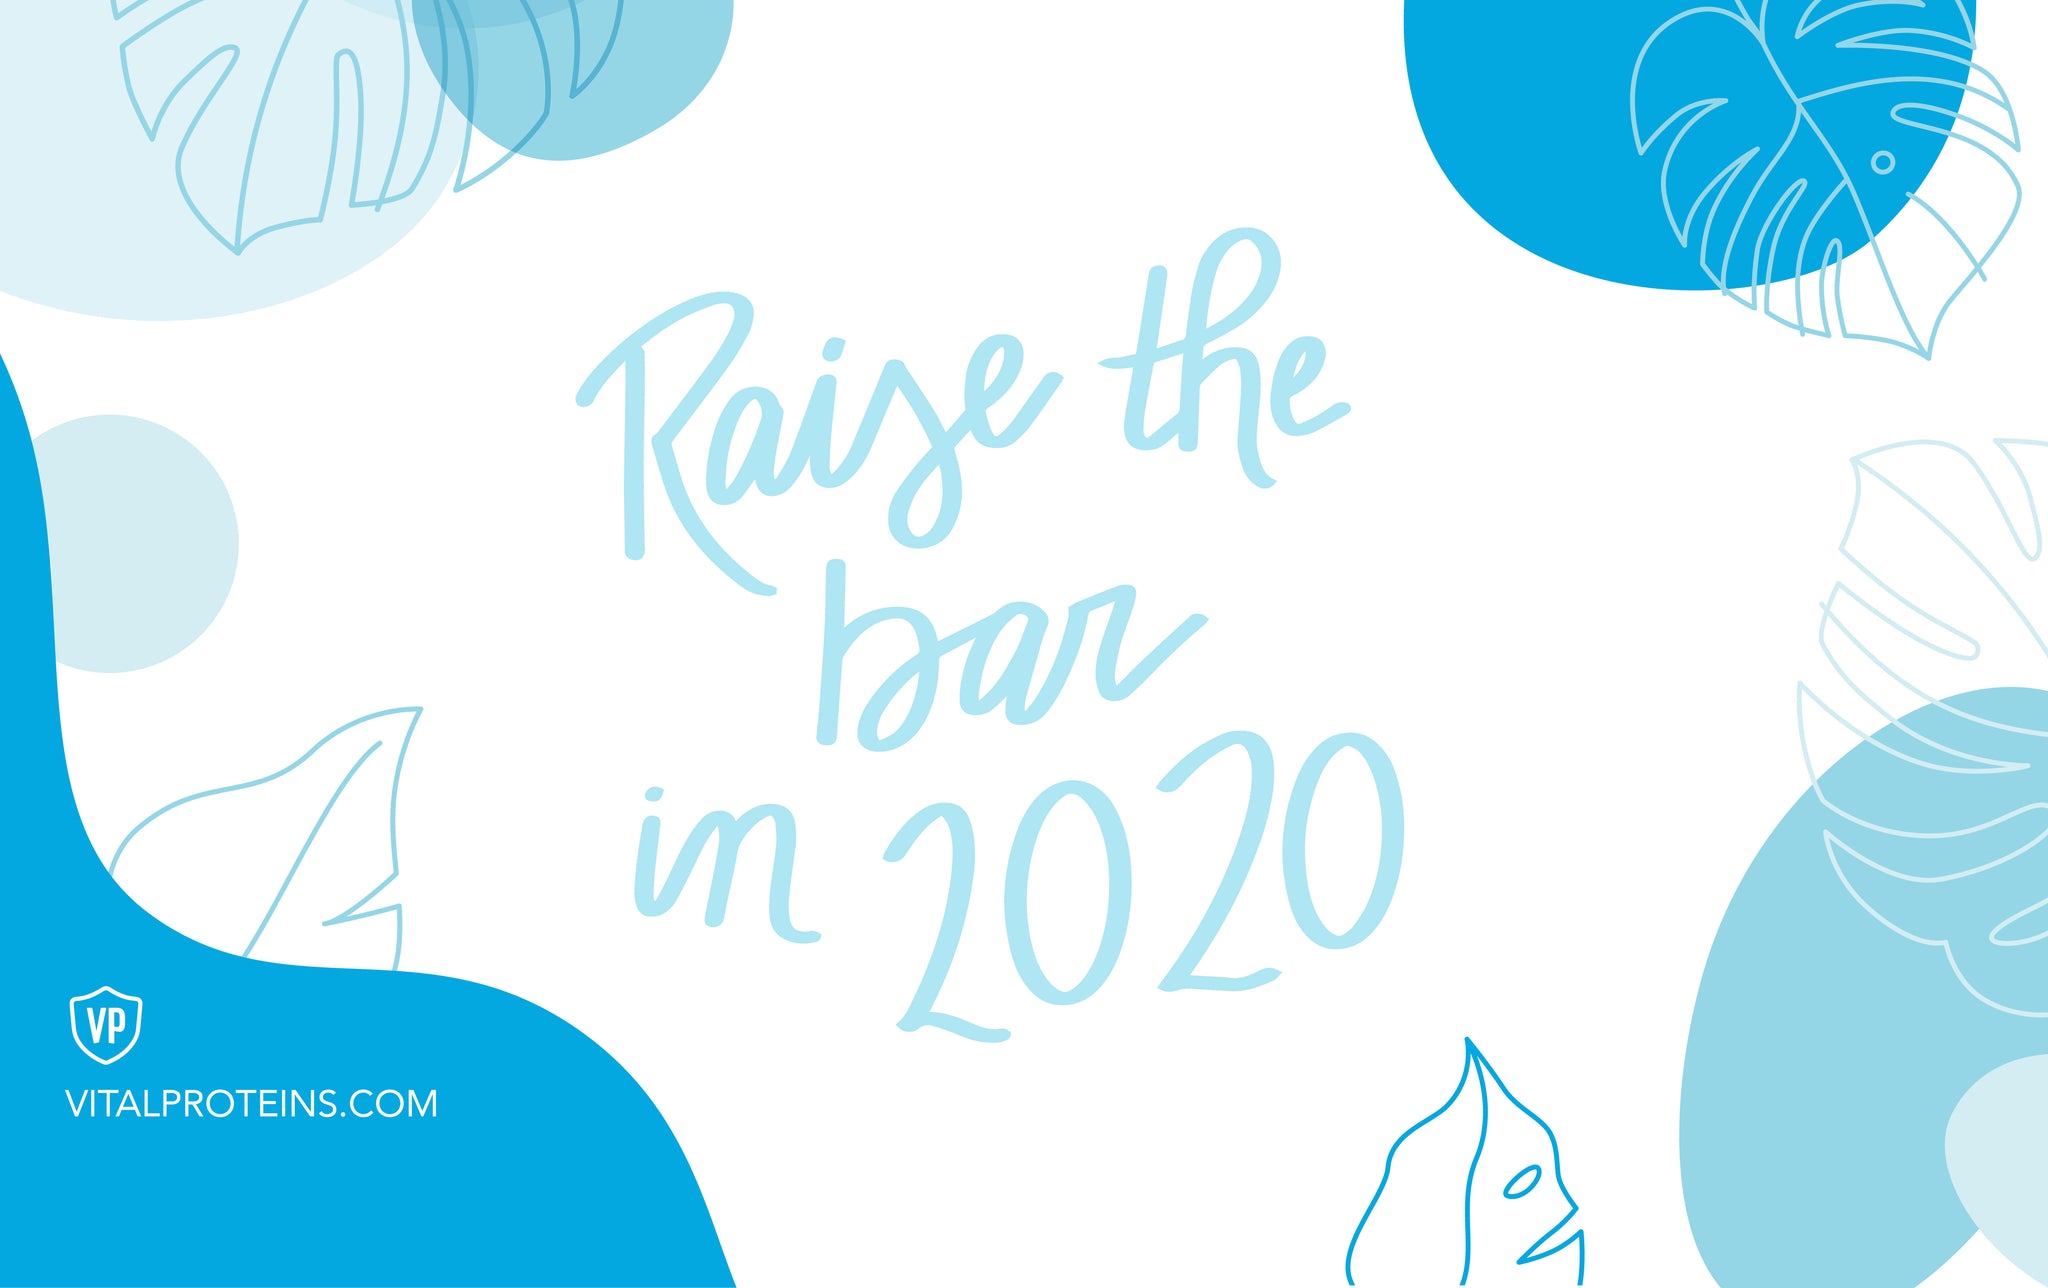 raise the bar in 2020